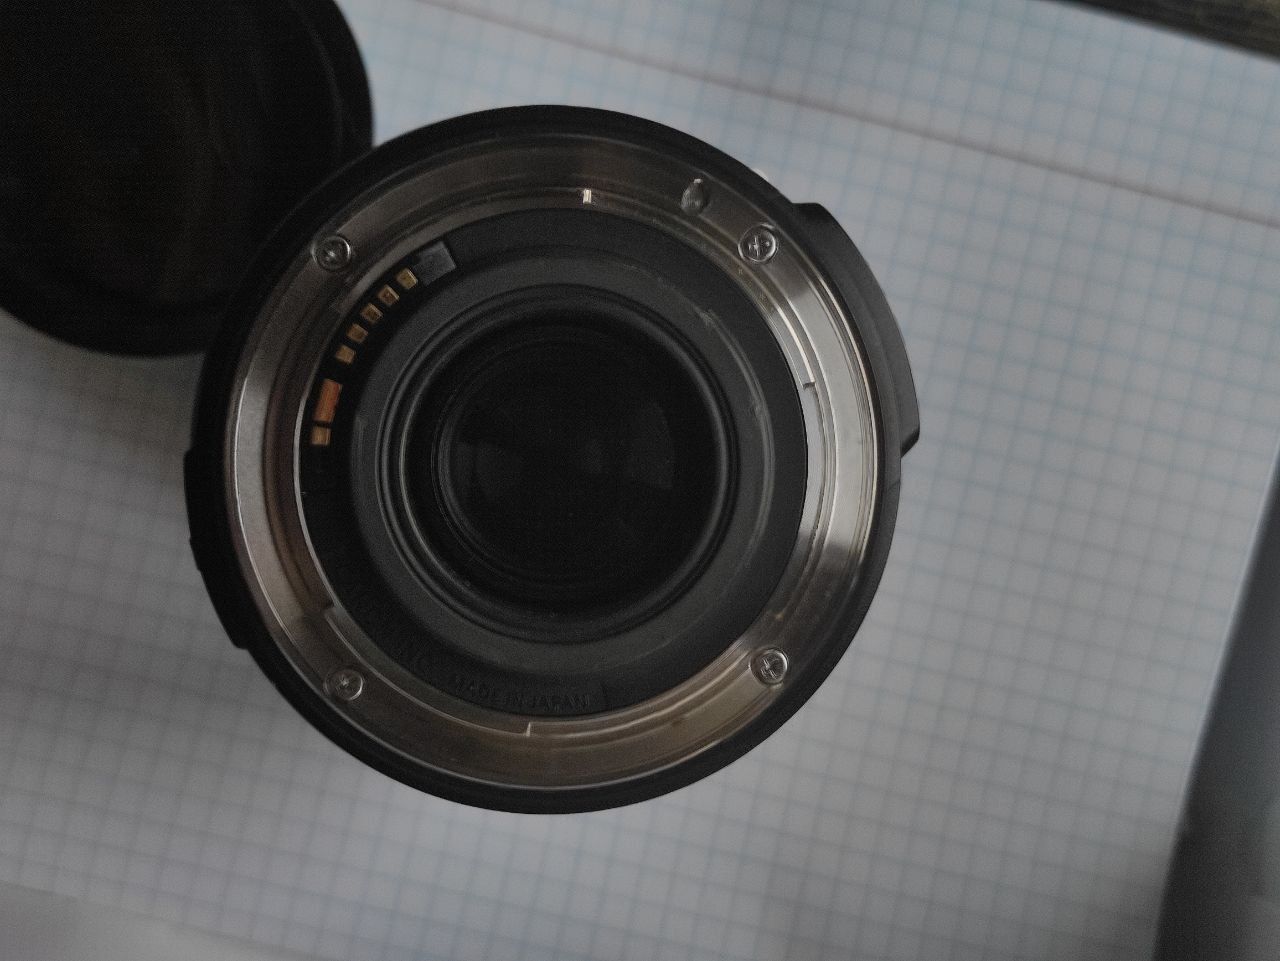 Об'єктив Canon EF-S 18-200mm 1:3.5-5.6 IS

Об'єктив в чудовому стані.